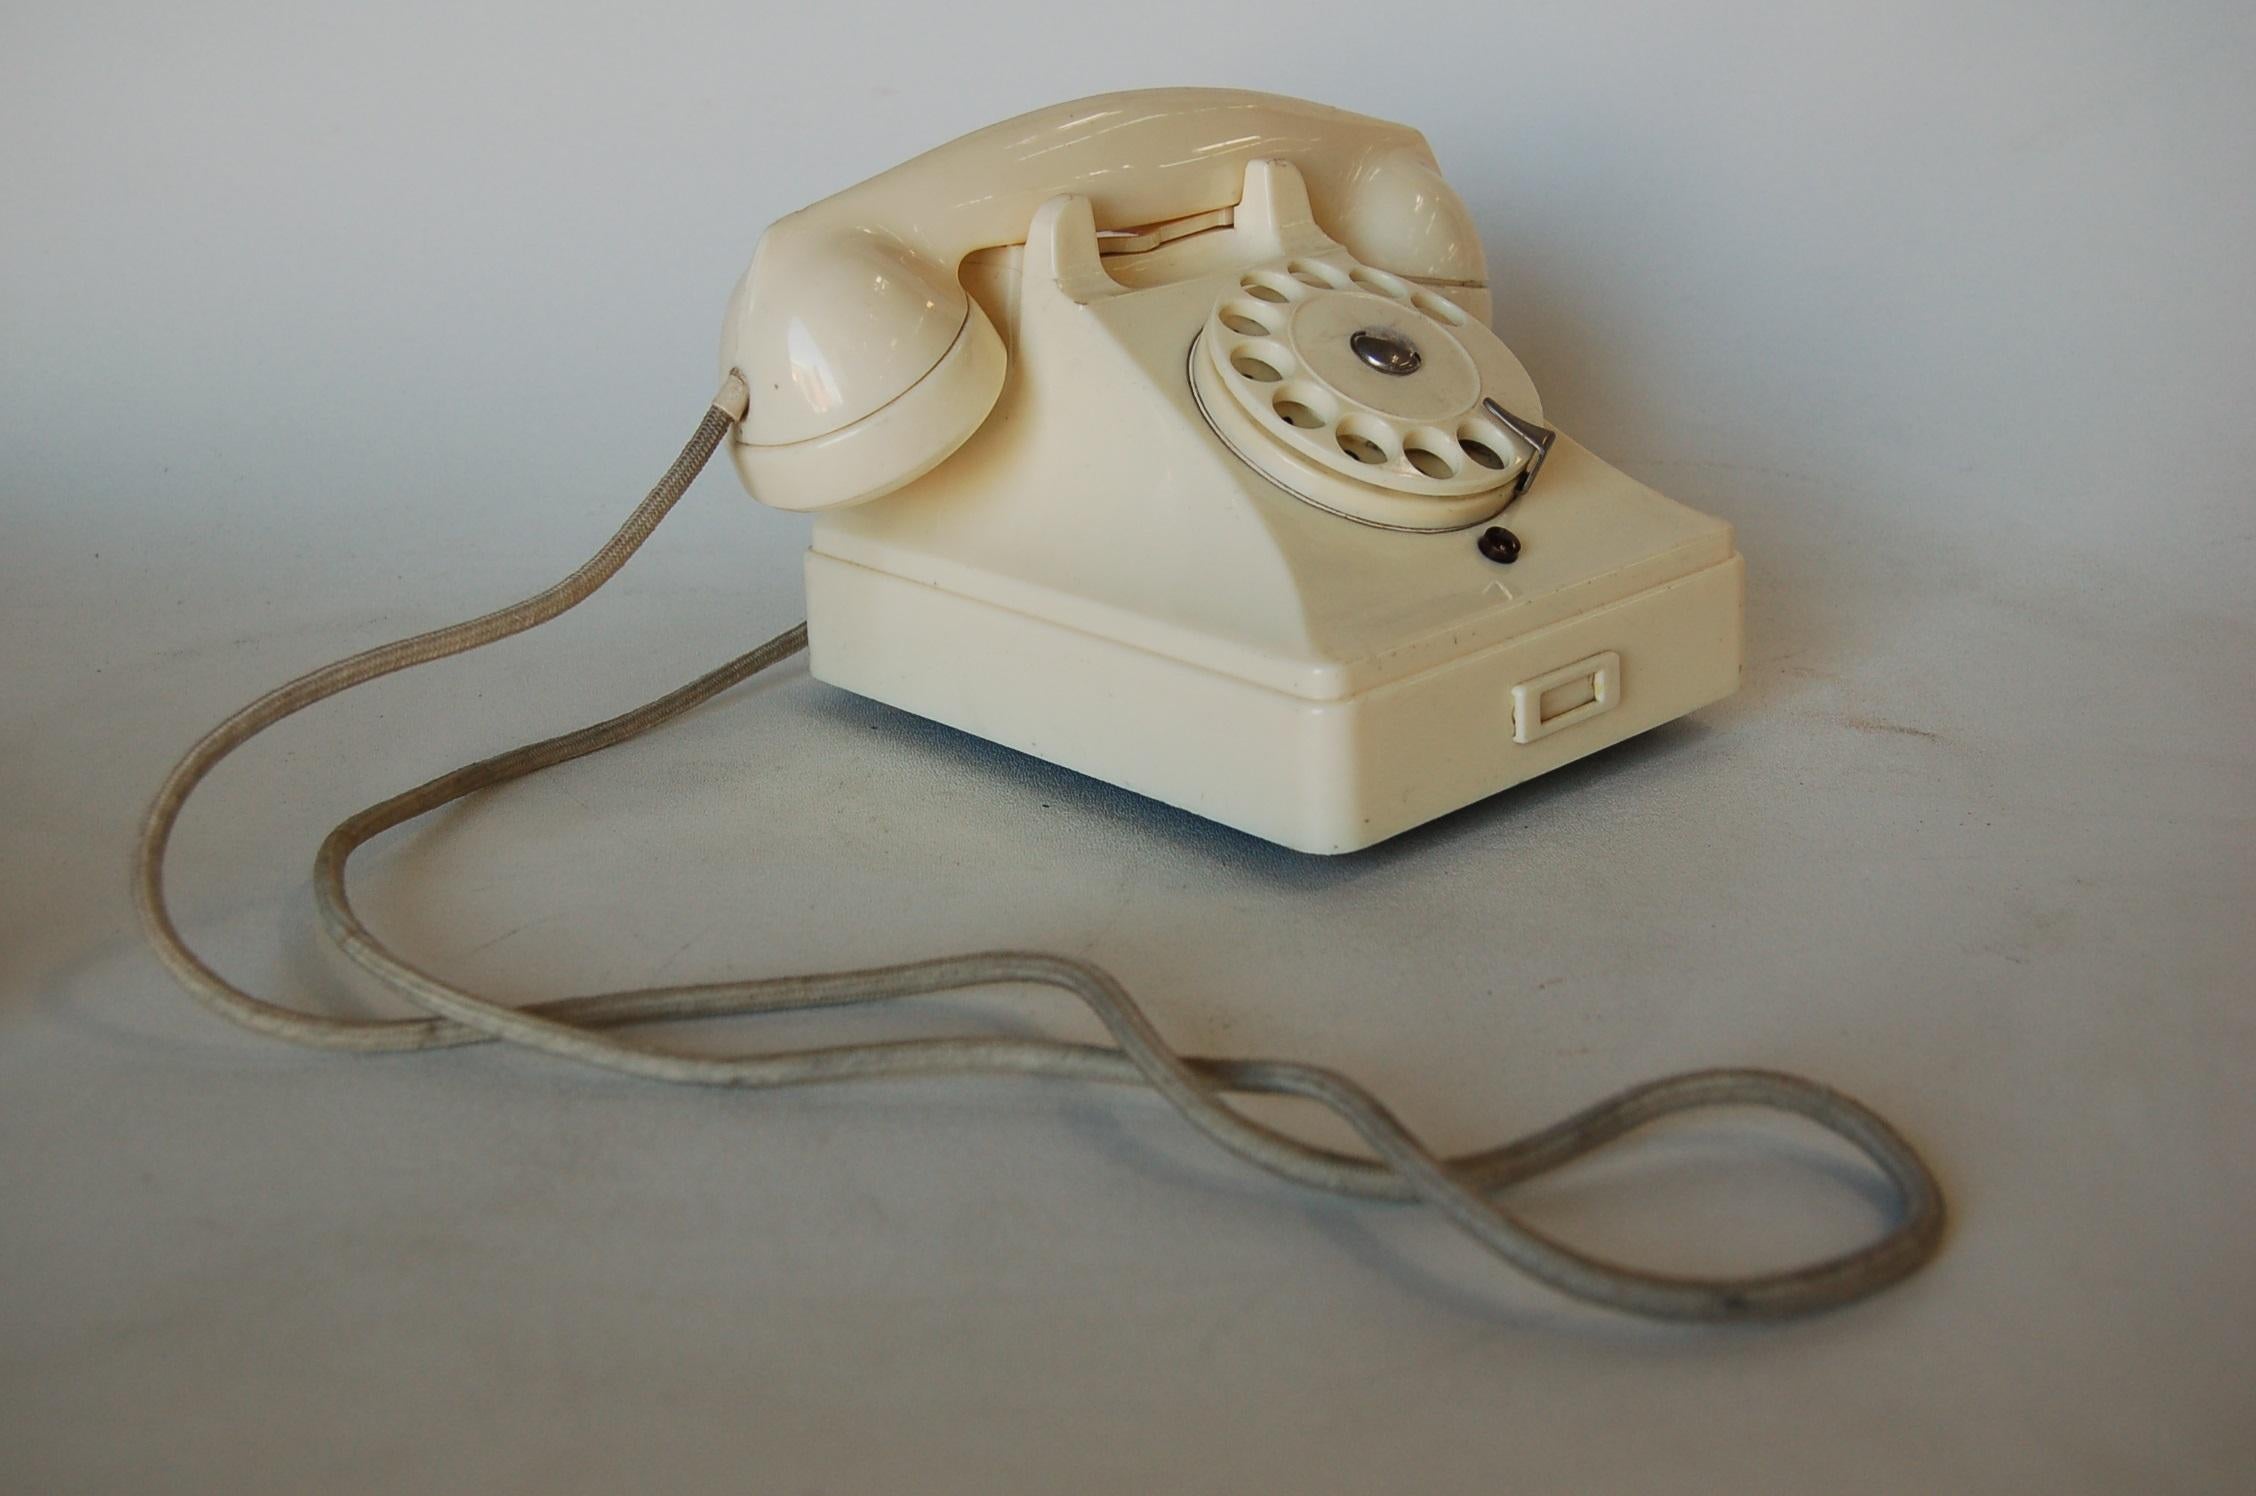 bakelite telephones